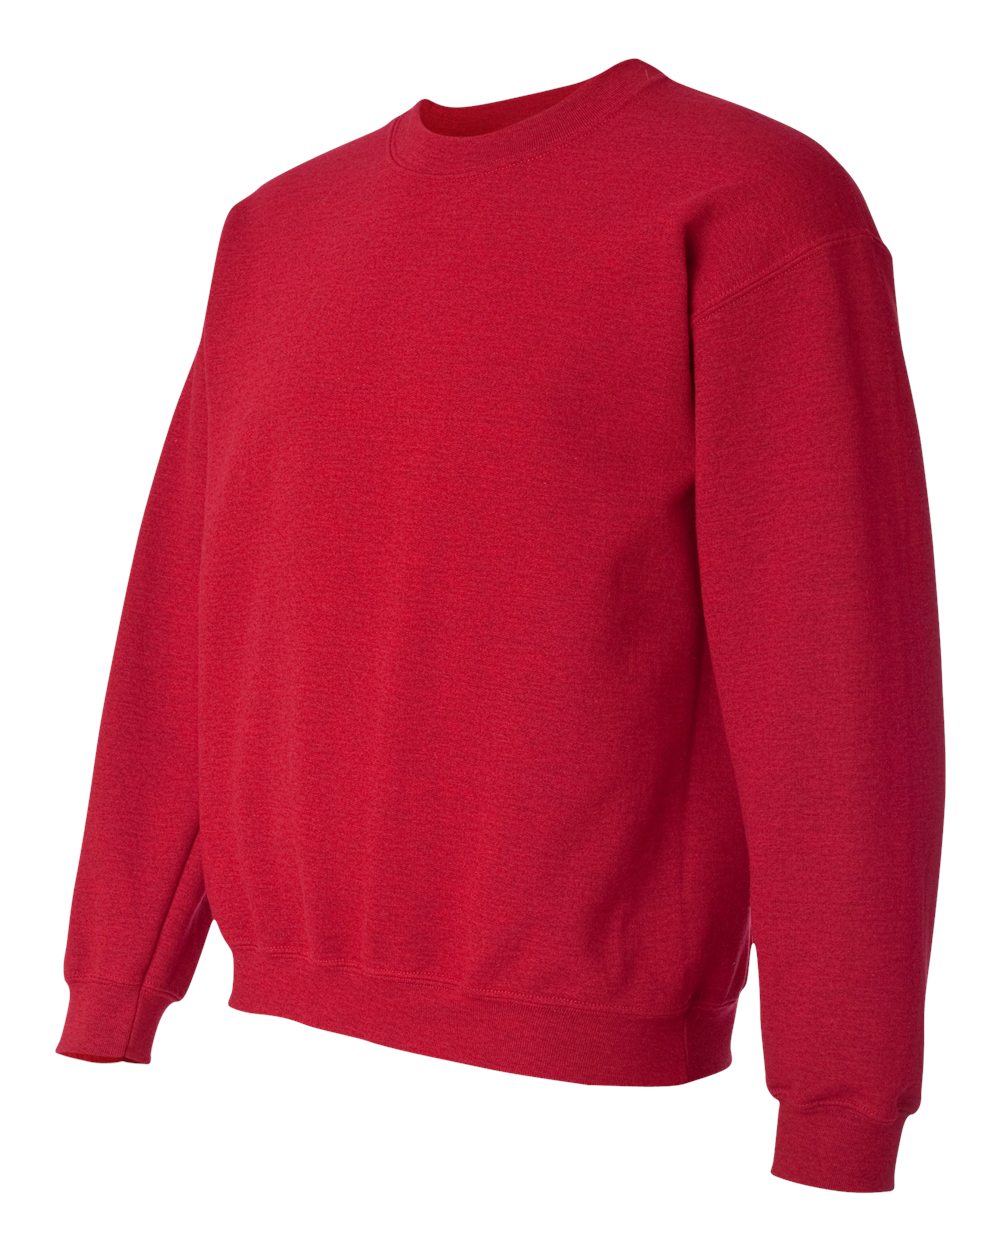 Gildan Heavy Blend Crew Neck sweater GI18000 Antique Cherry Red